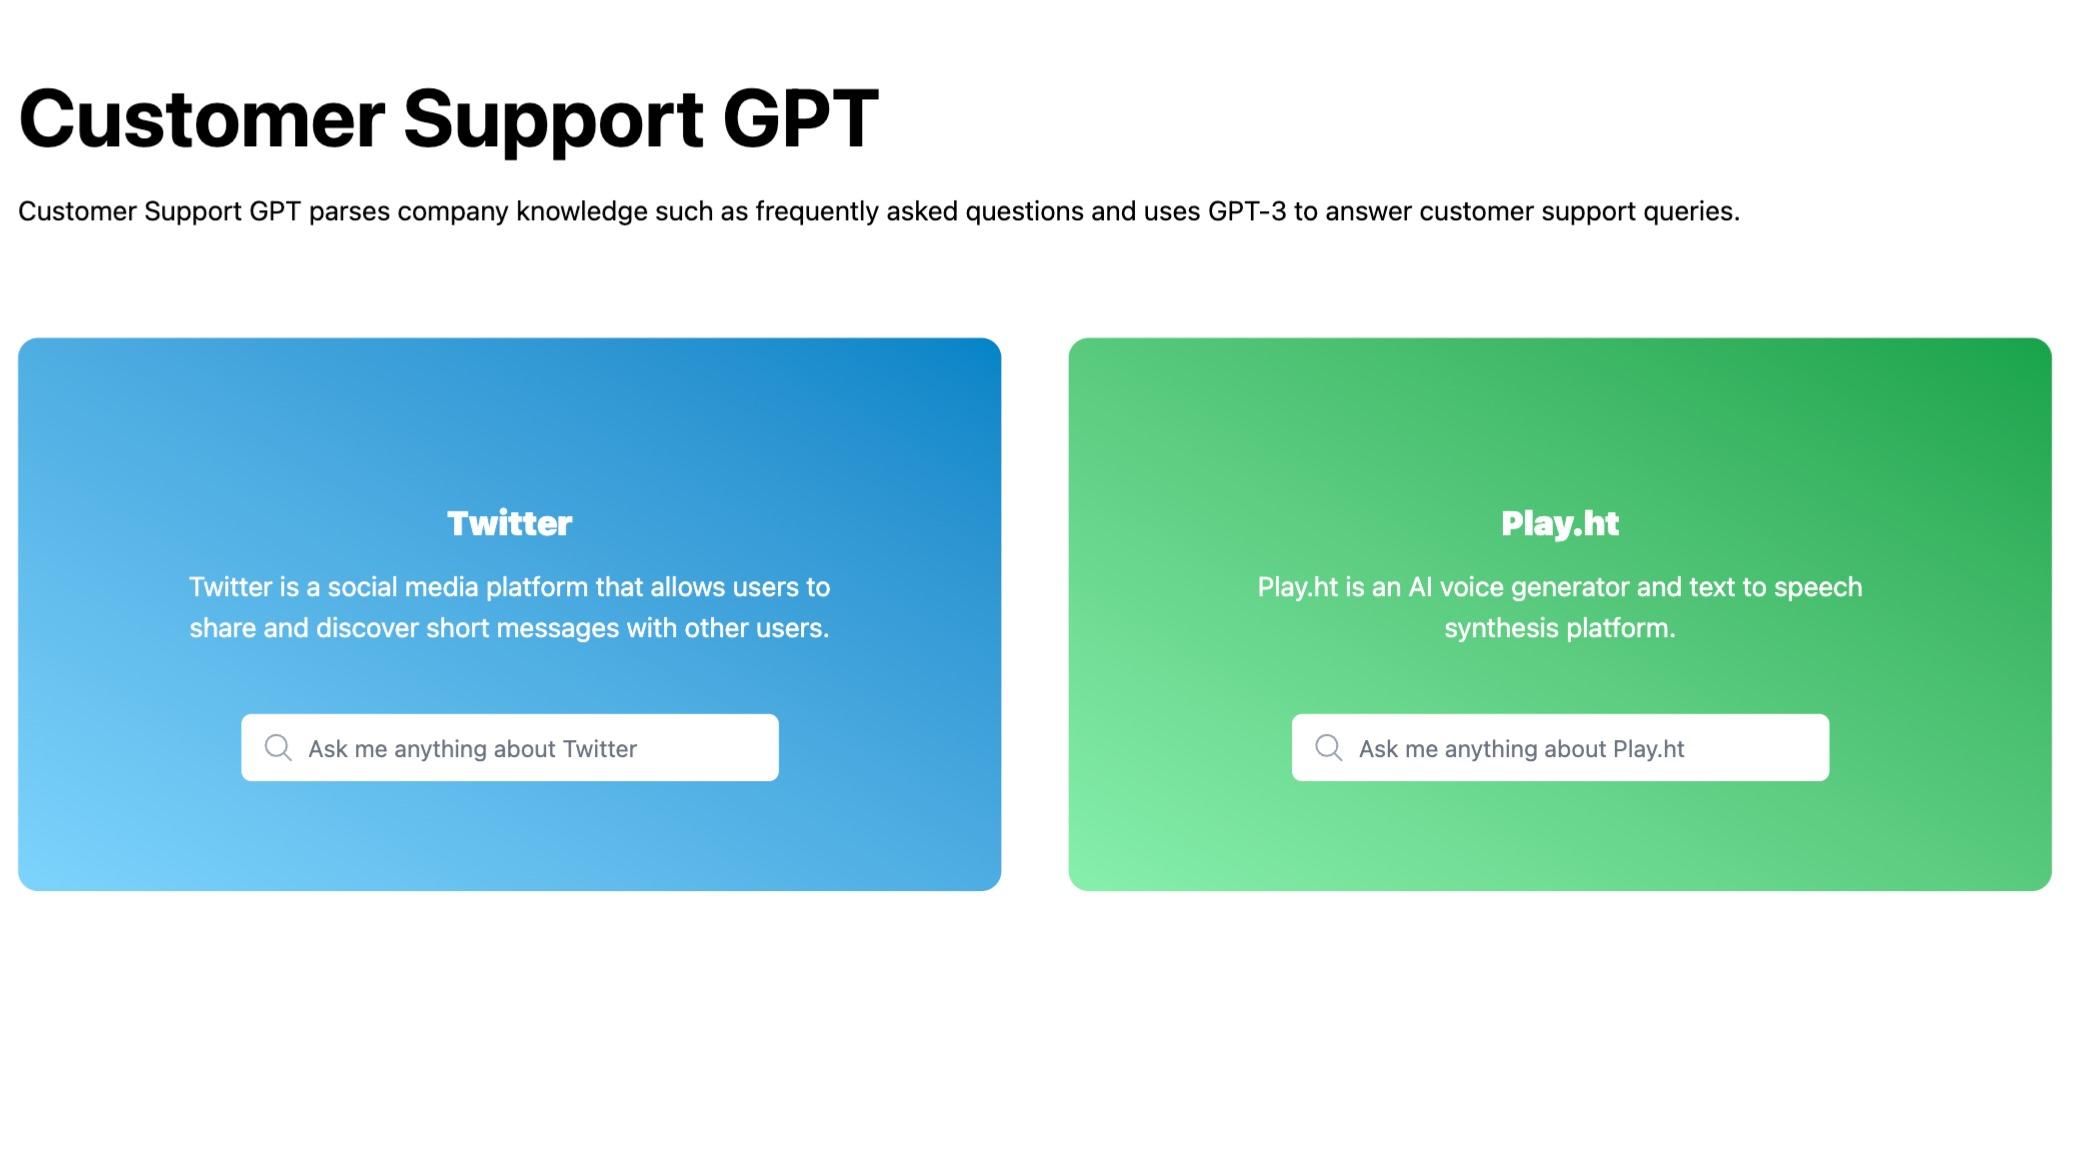 Customer Support GPT